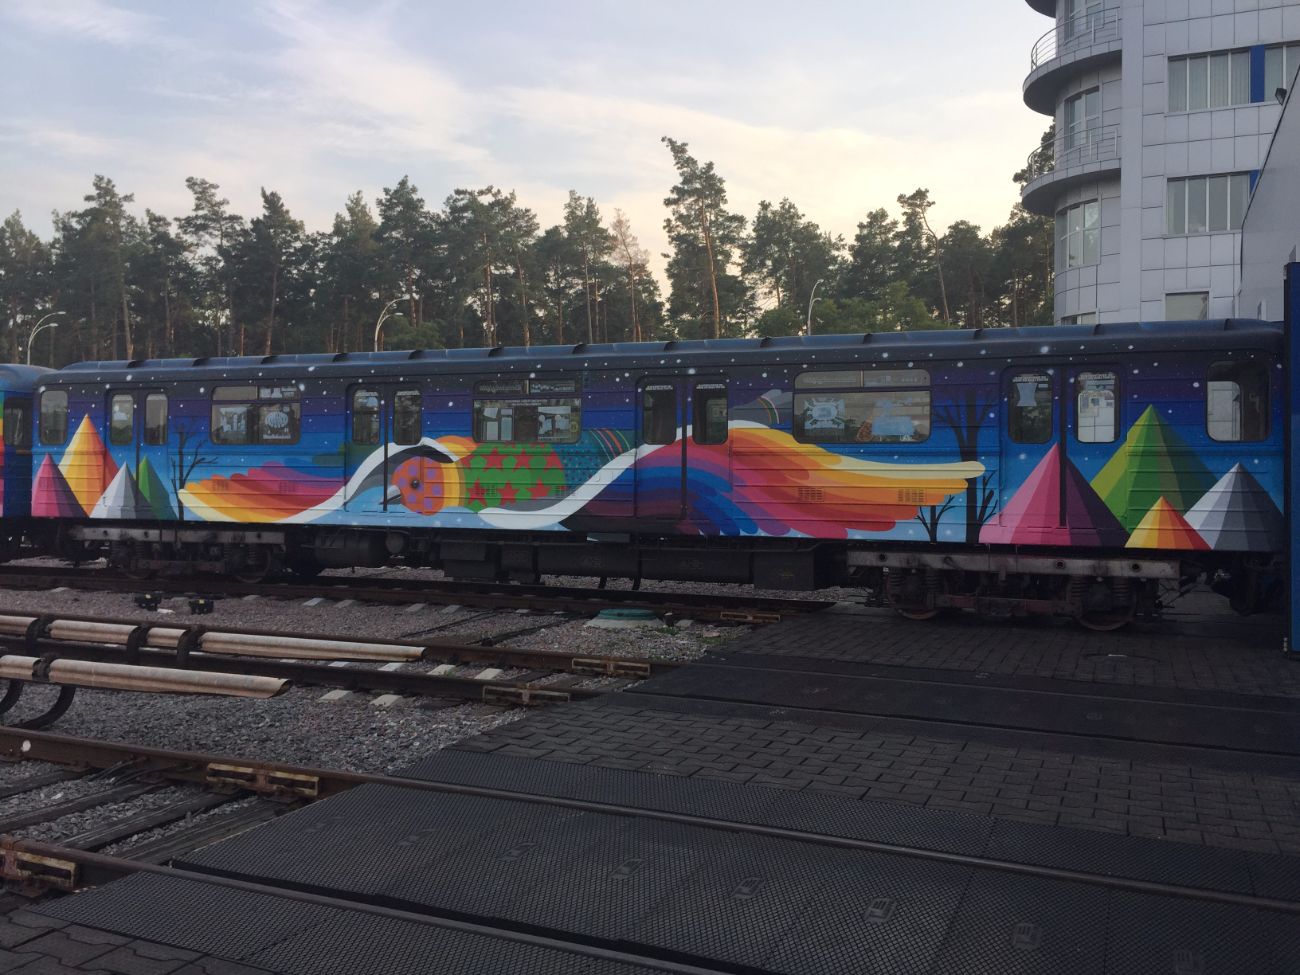 okuda-san-miguels-5-car-train-in-kiev-ukraine-thevandallist-3